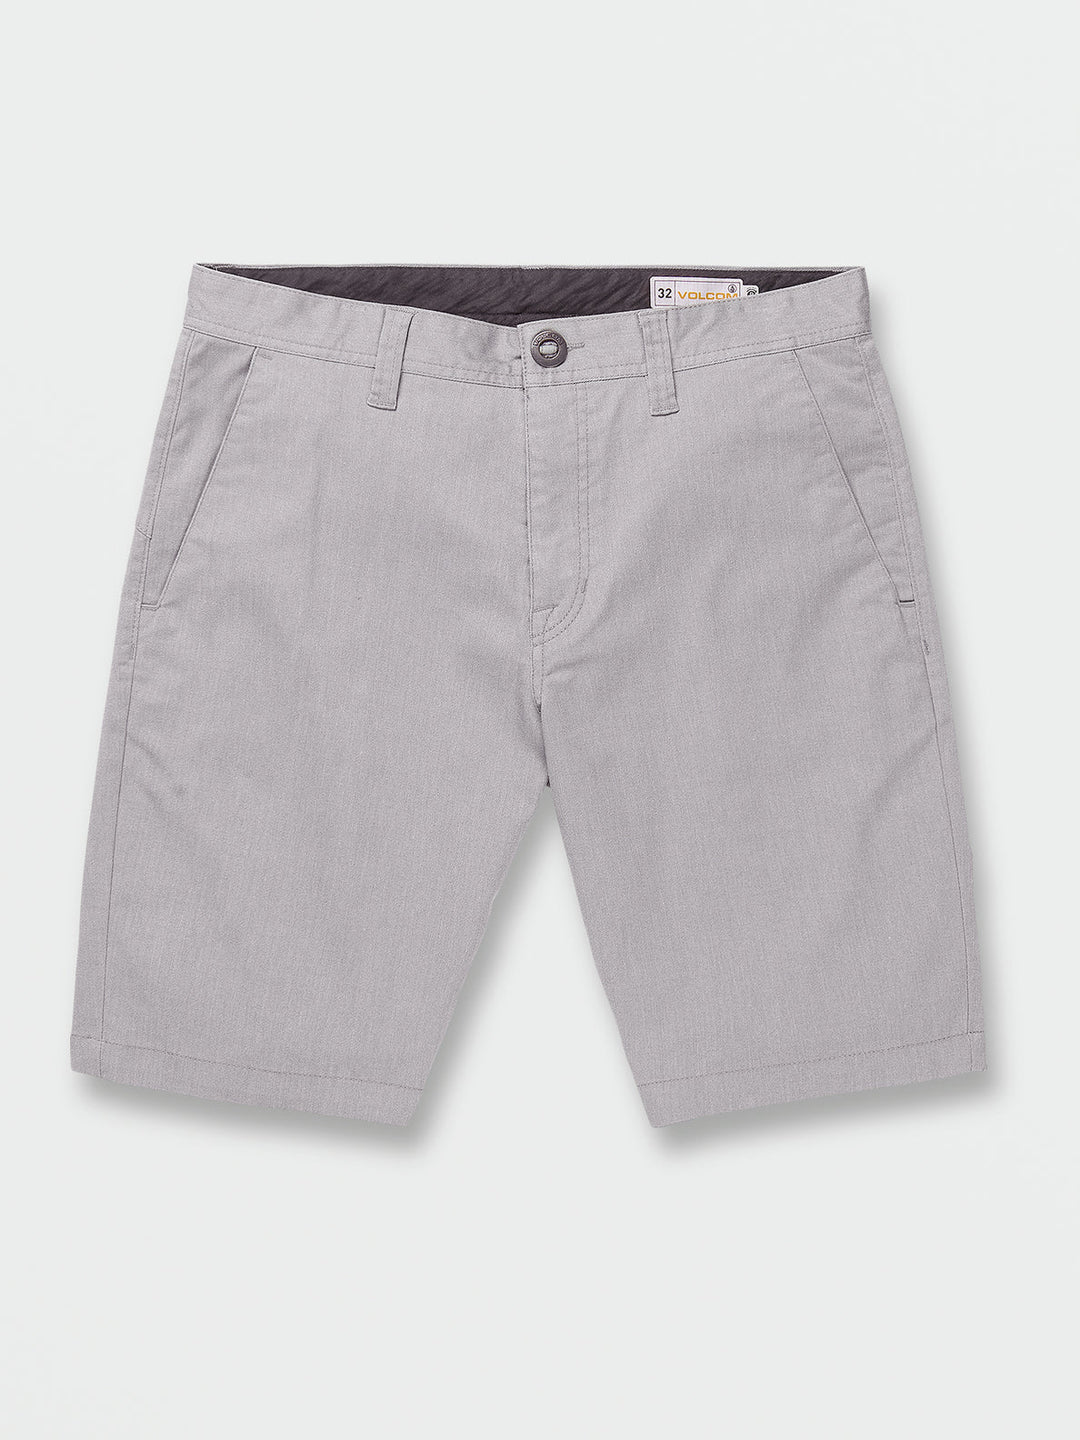 Volcom Frickin Modern Stretch Shorts - Grey - Sun Diego Boardshop